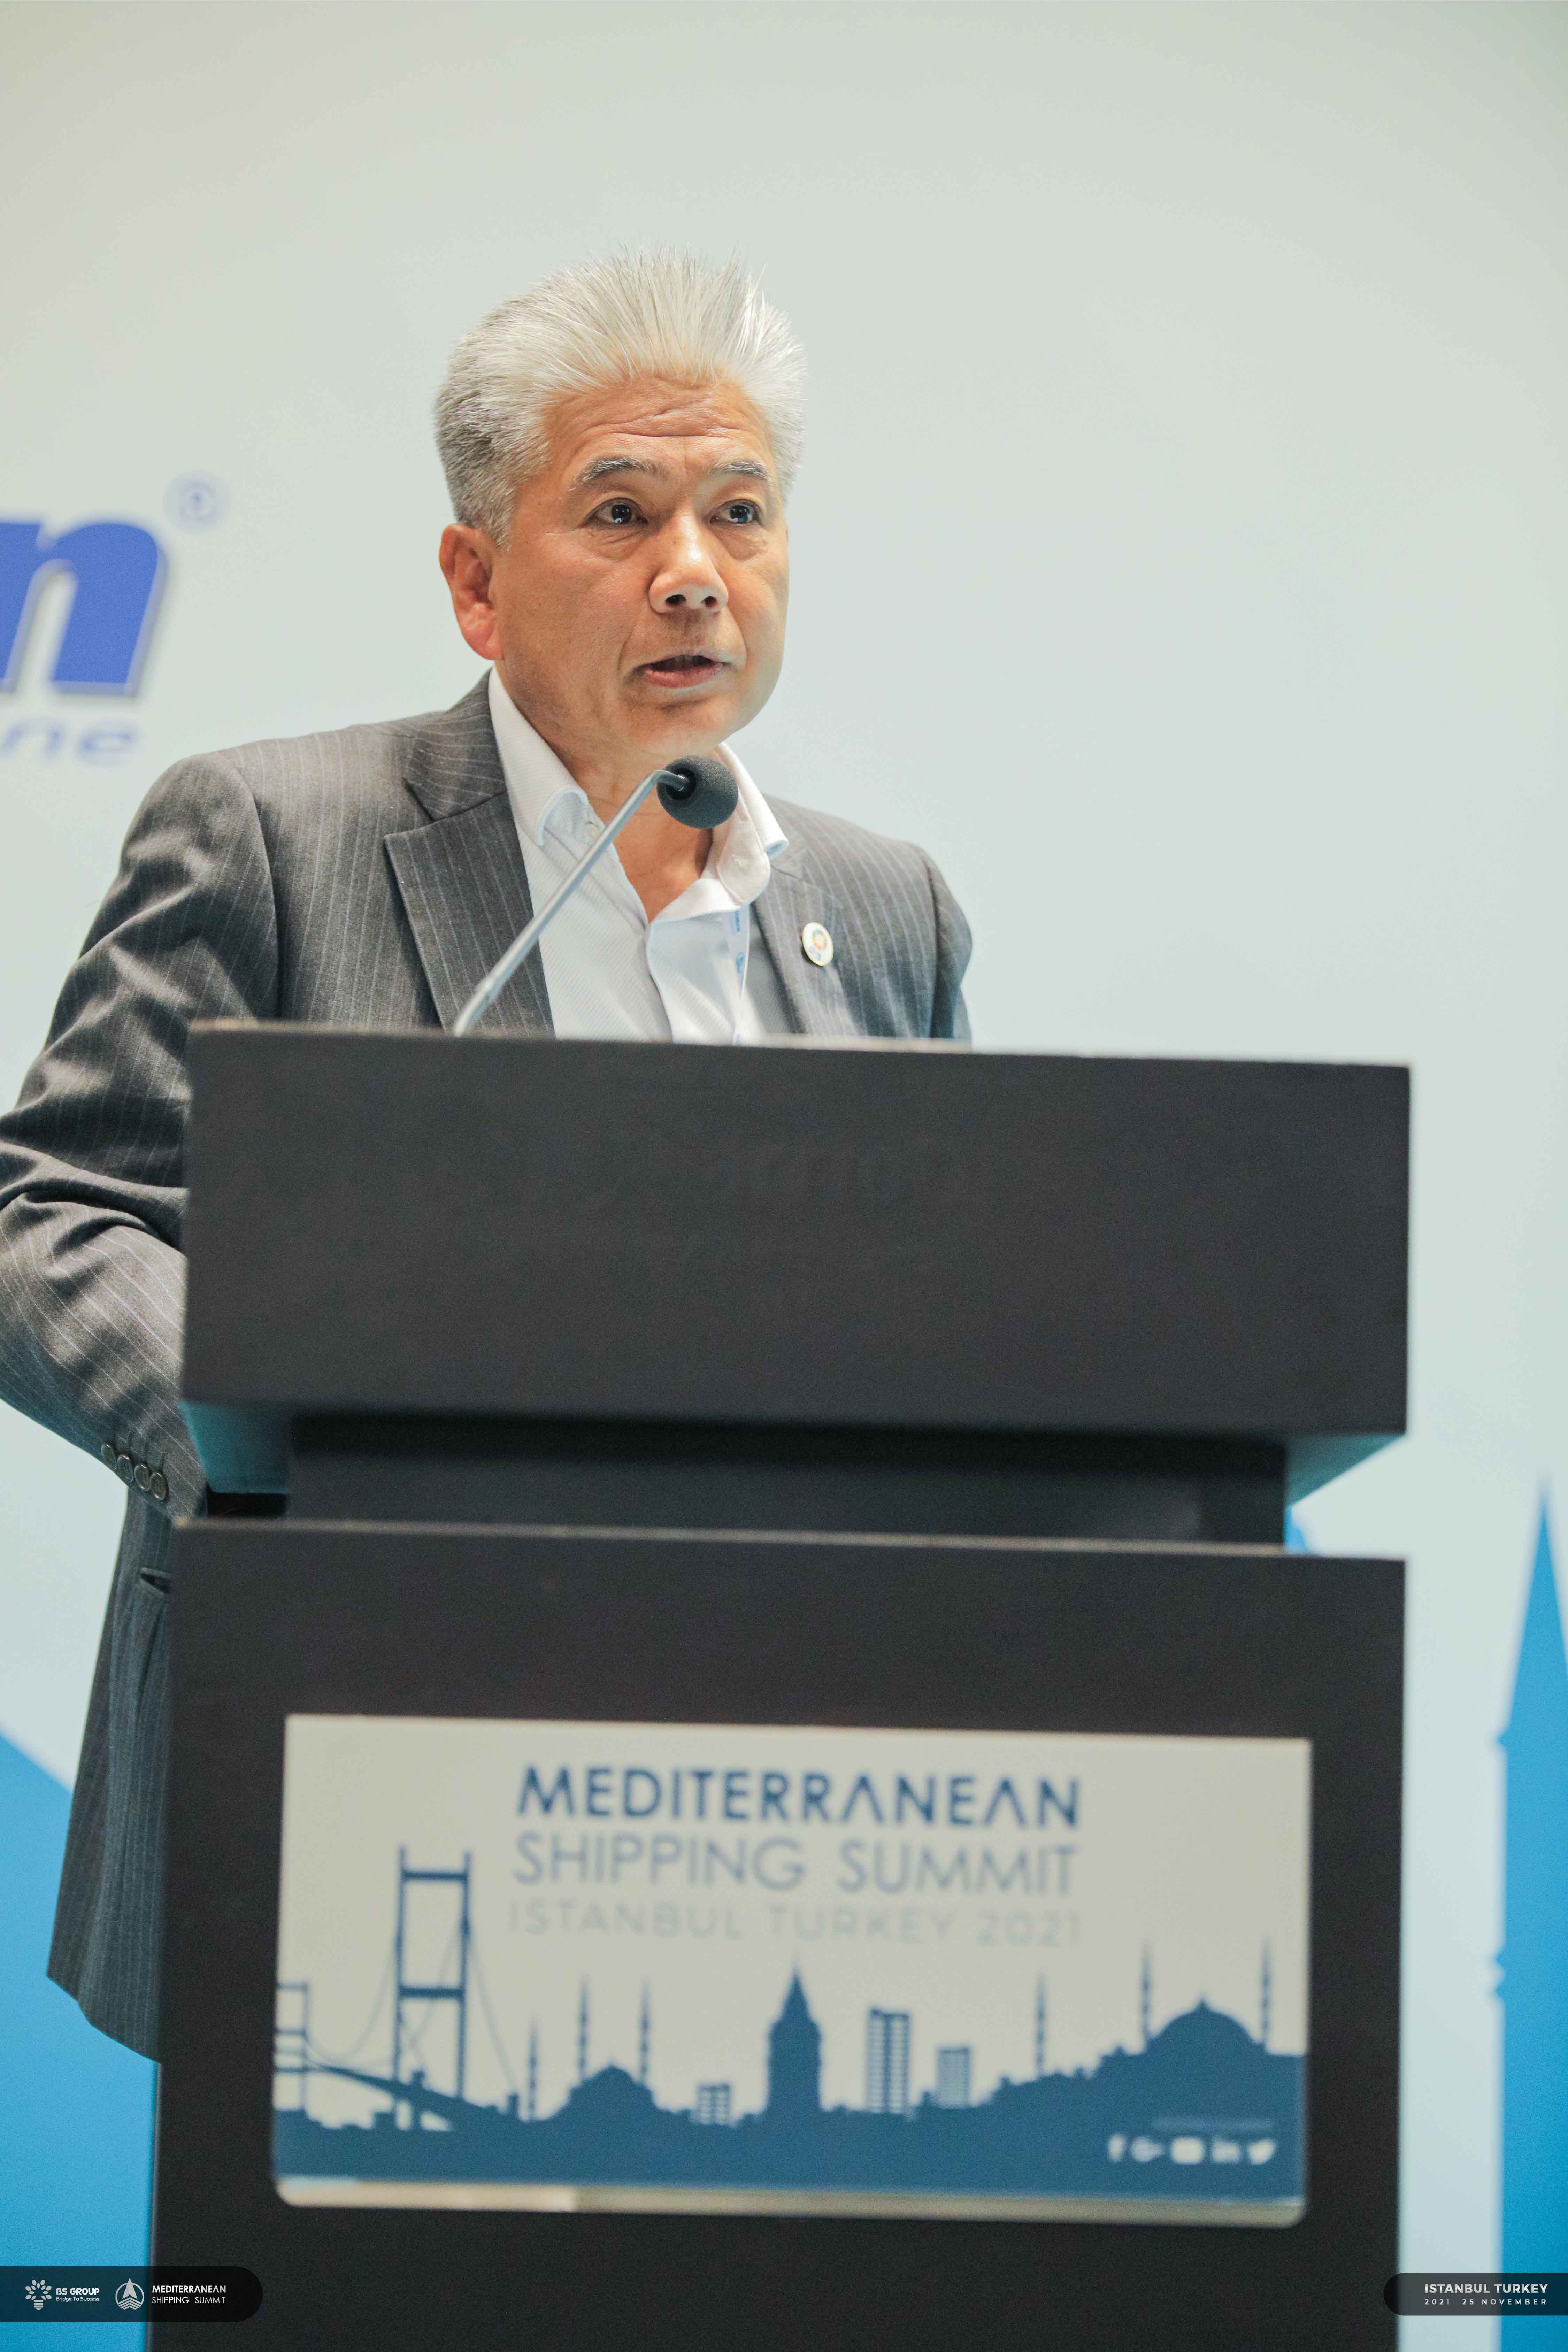 Mediterranean Shipping Summit 2021 Image